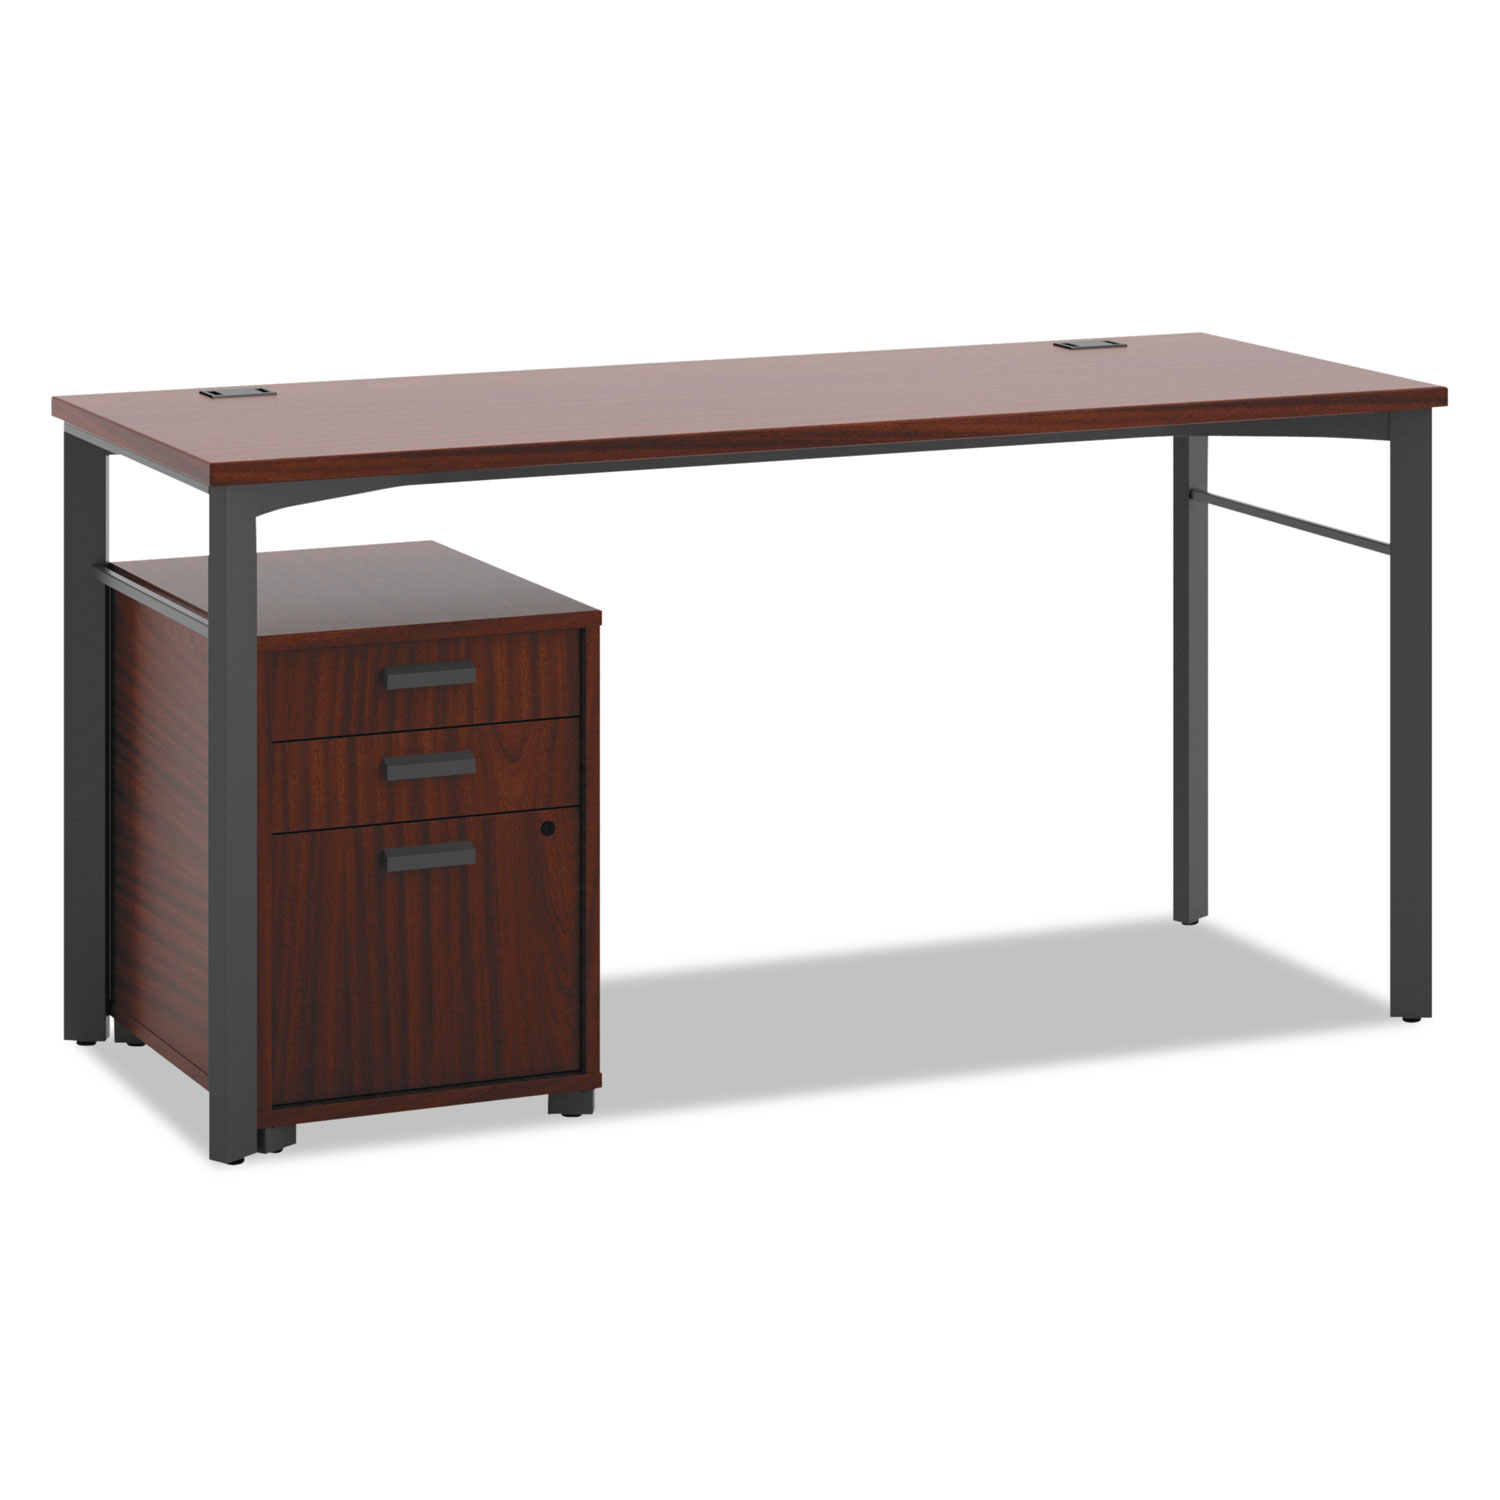  HON BSXMLDP6024C Manage Series Table Desk with Pedestal, 60w x 23.5d x 29.5h, Chestnut (BSXMLDP6024C) 